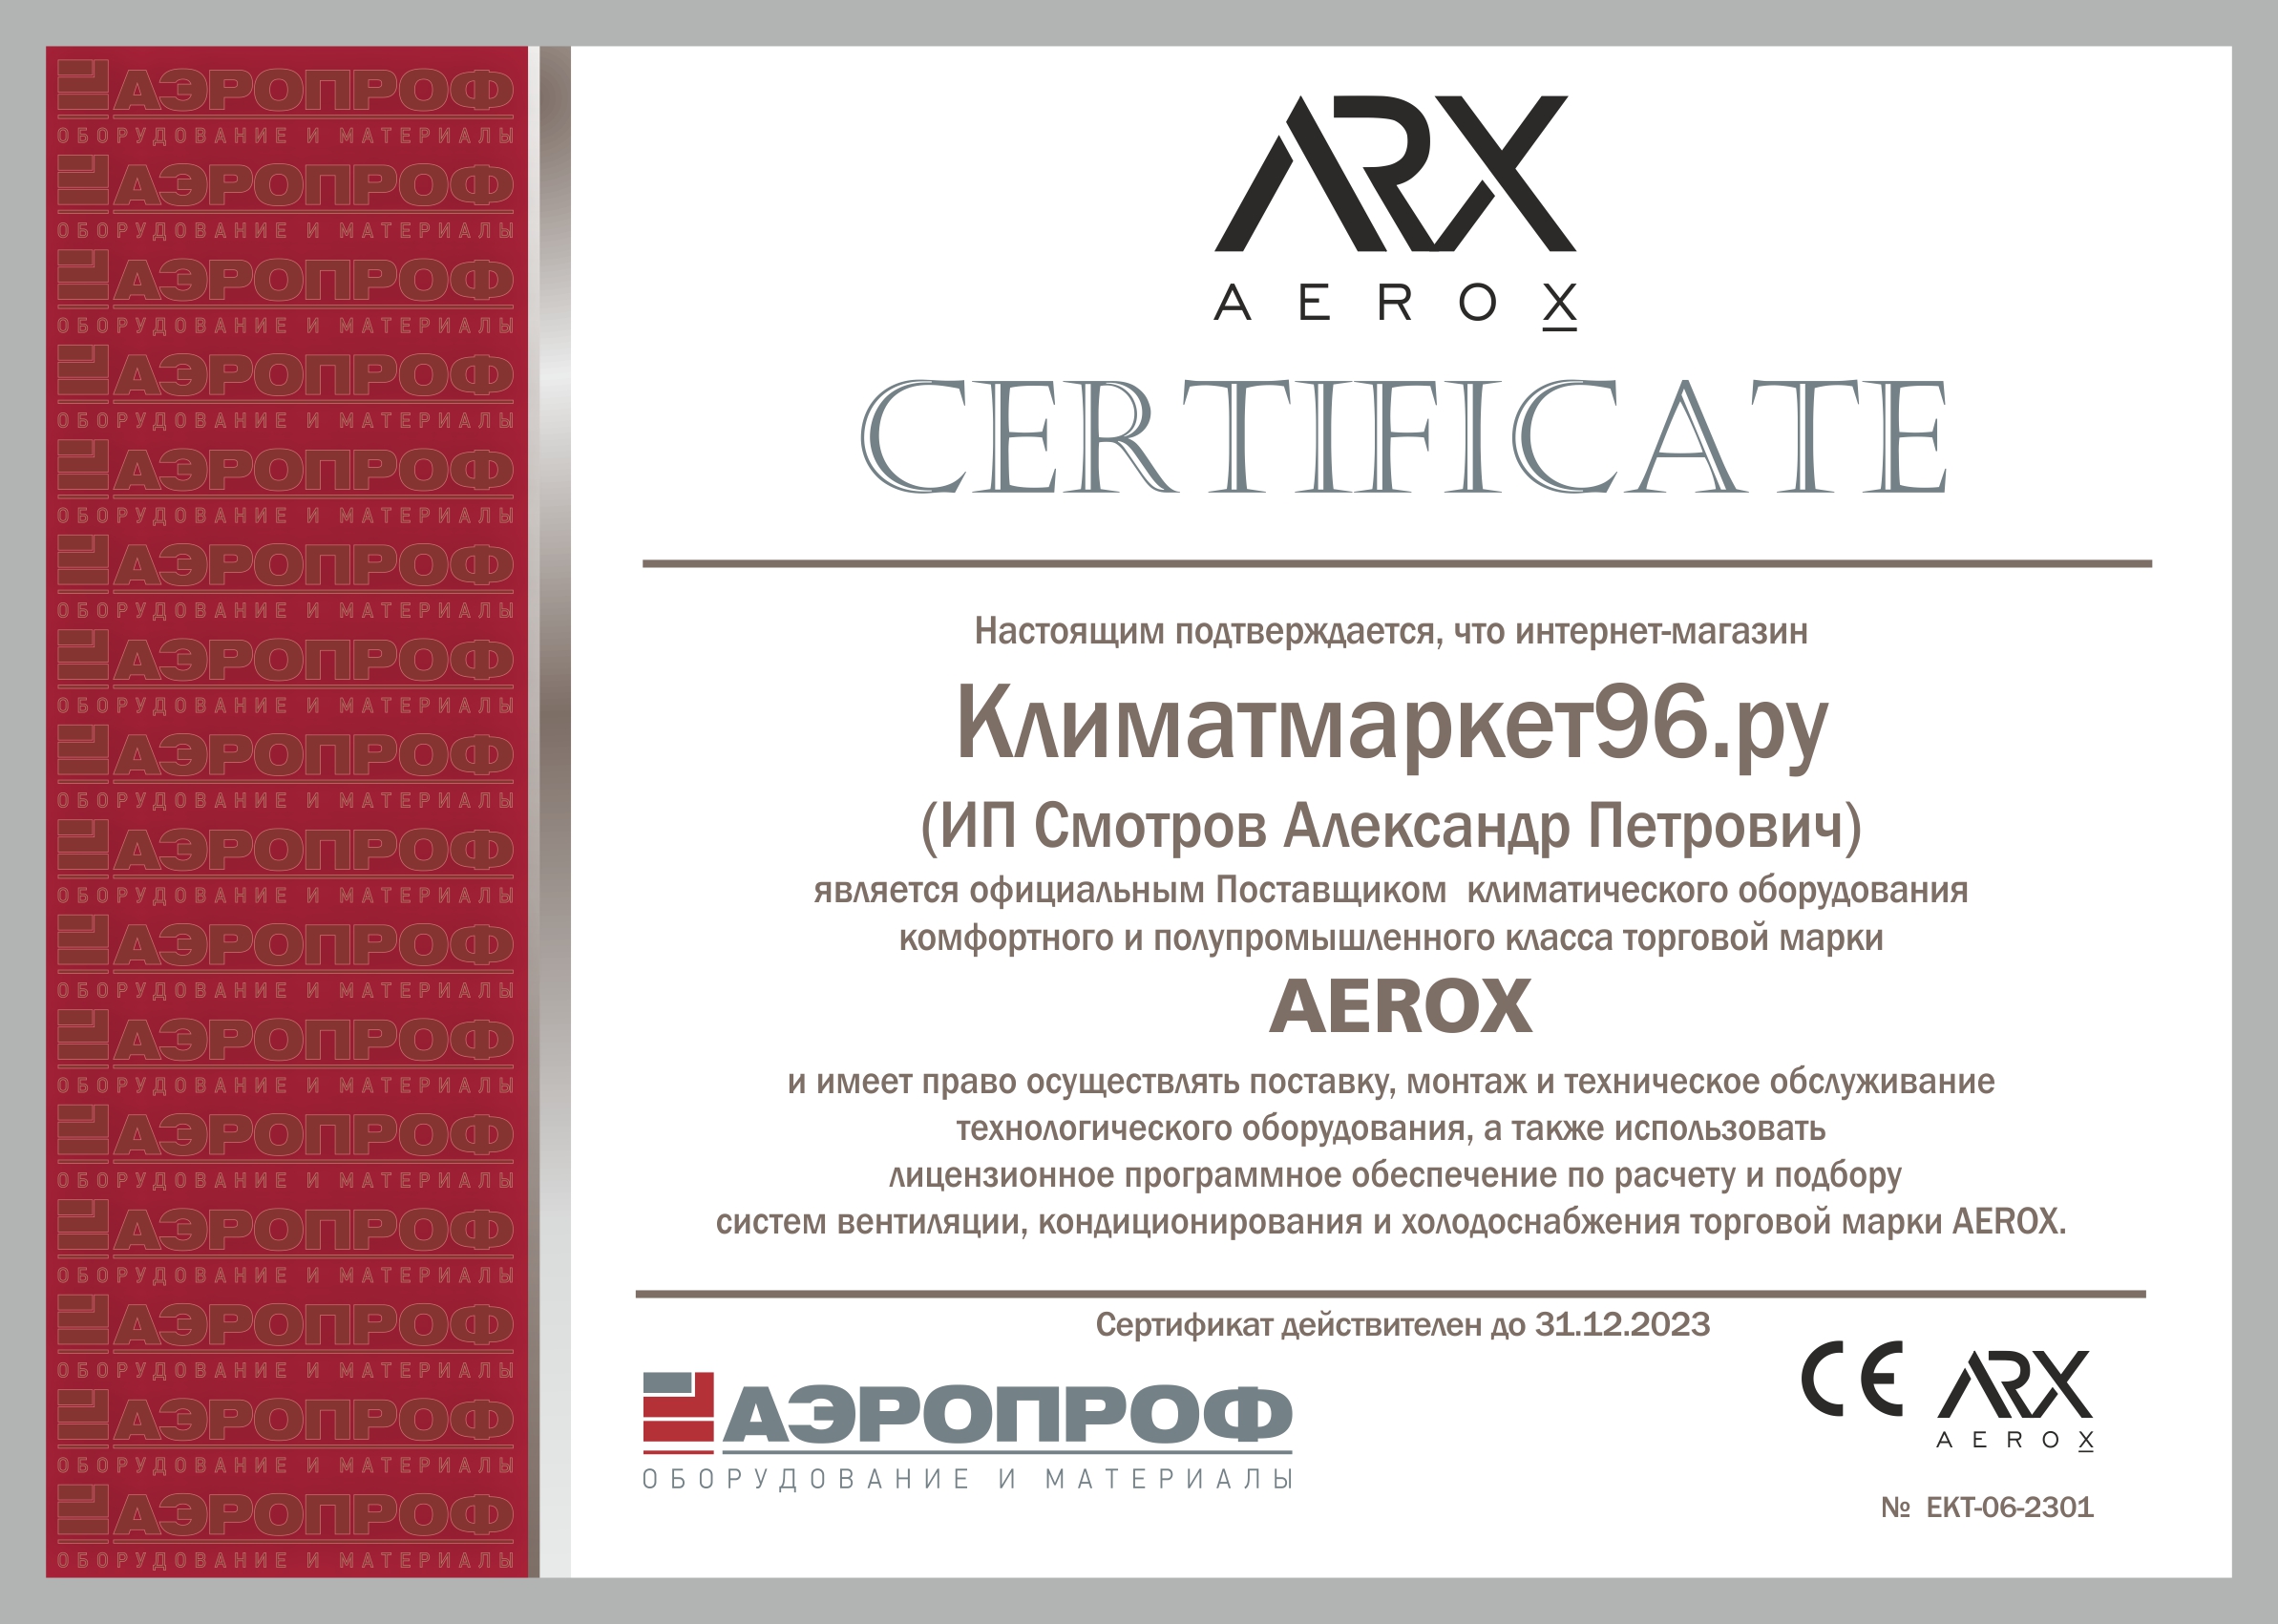 sert23-km96-arx Kondicioner Aero ALRS-07IH3A-02/ALRS-07OH3A-02 kypit v Ekaterinbyrge v internet-magazine KlimatMarket96.ry Сертификат официального дилера